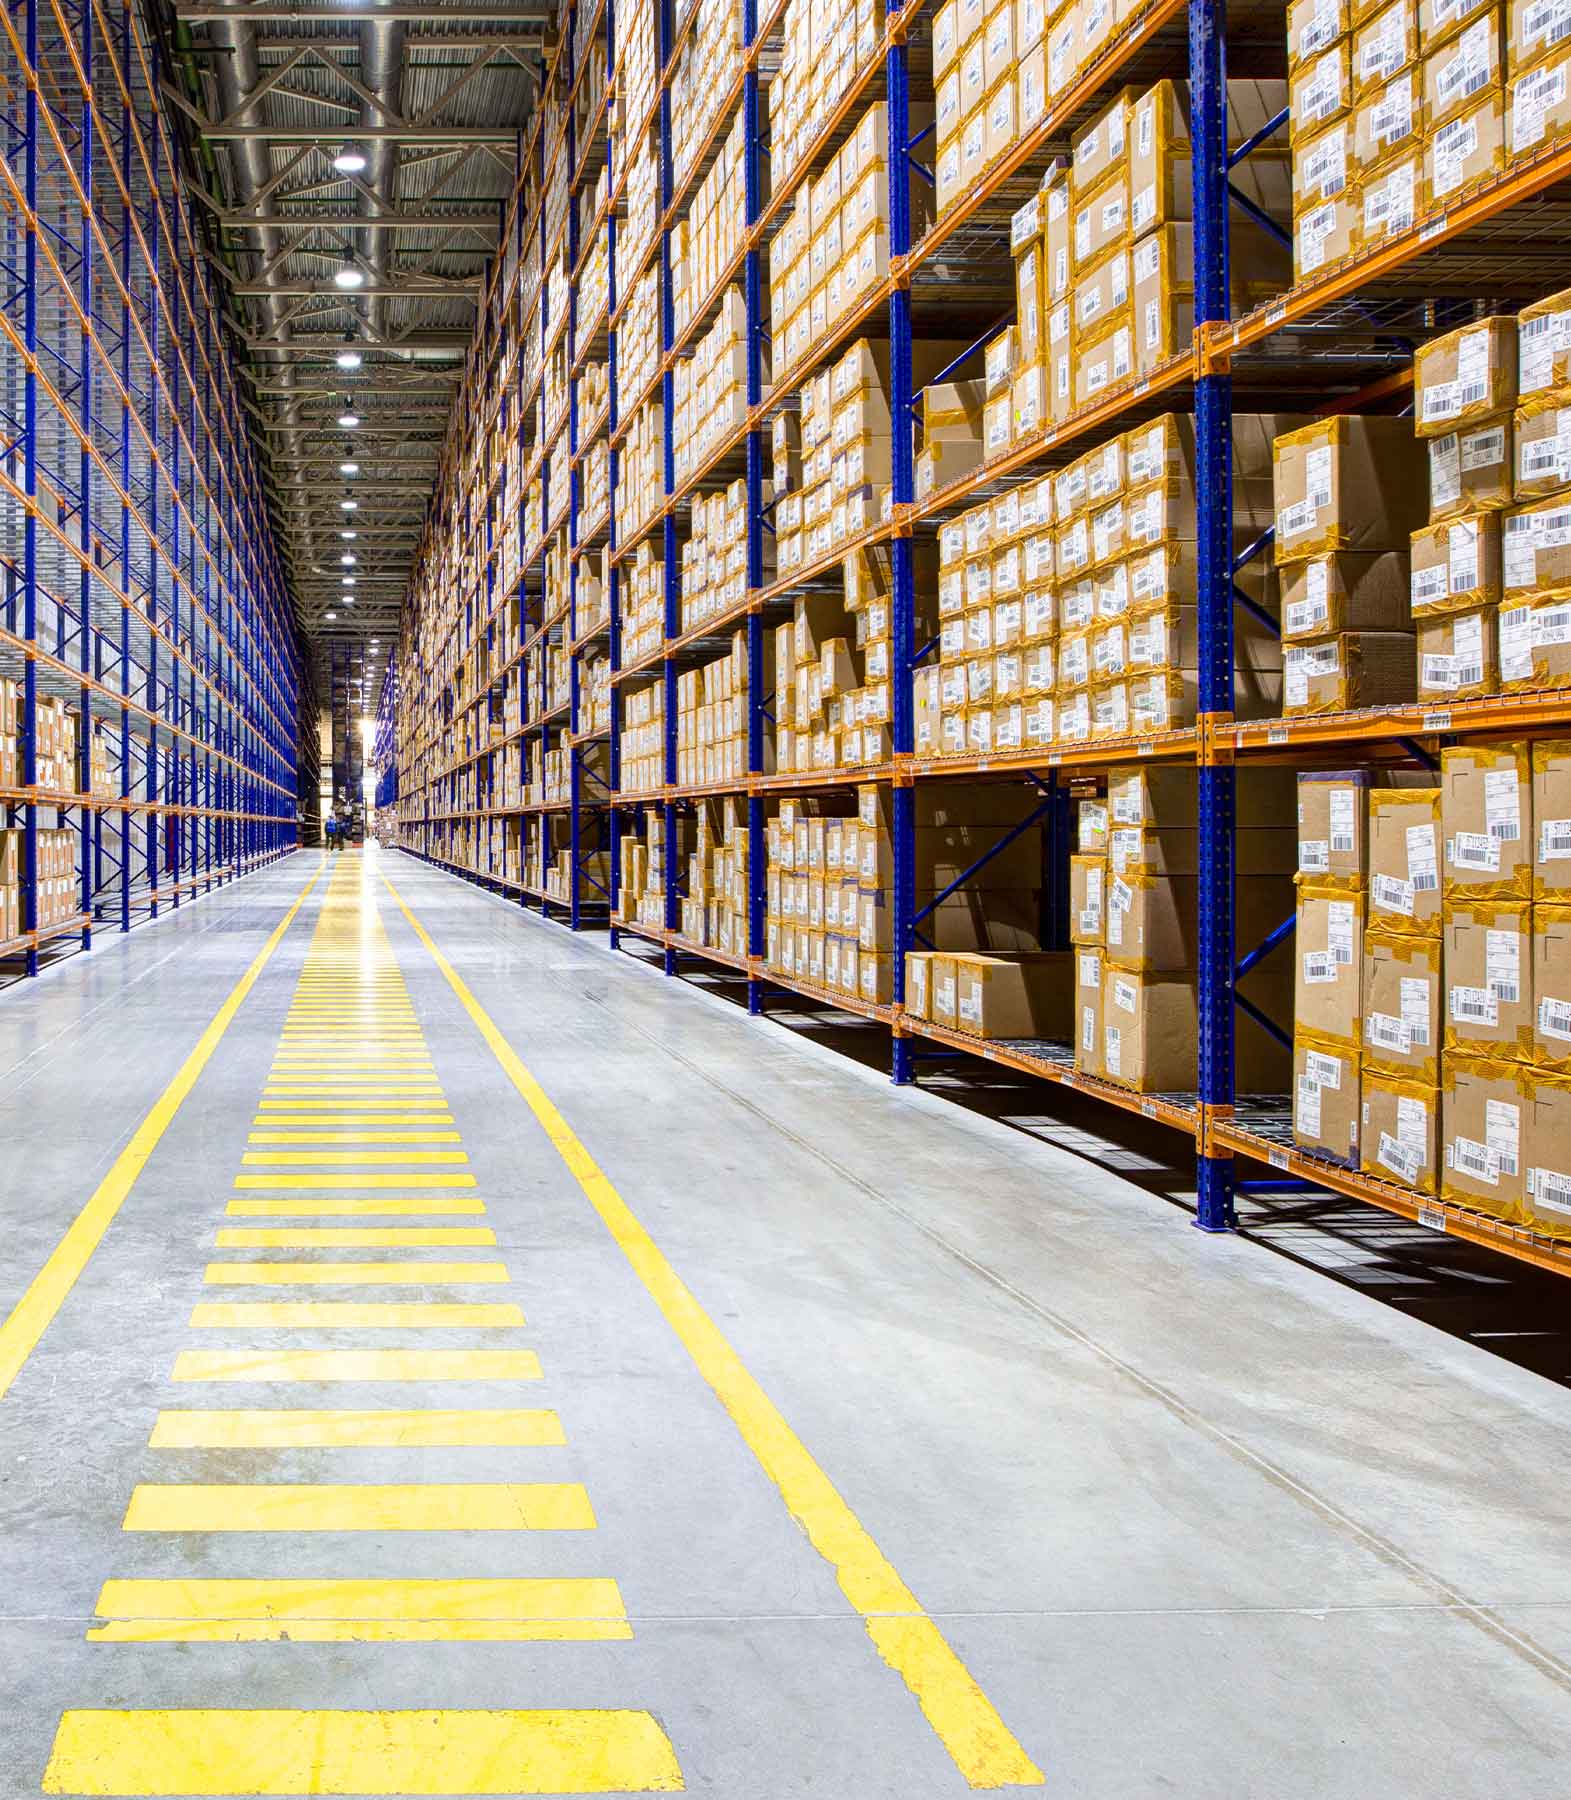 What Does a Logistics Company Do?